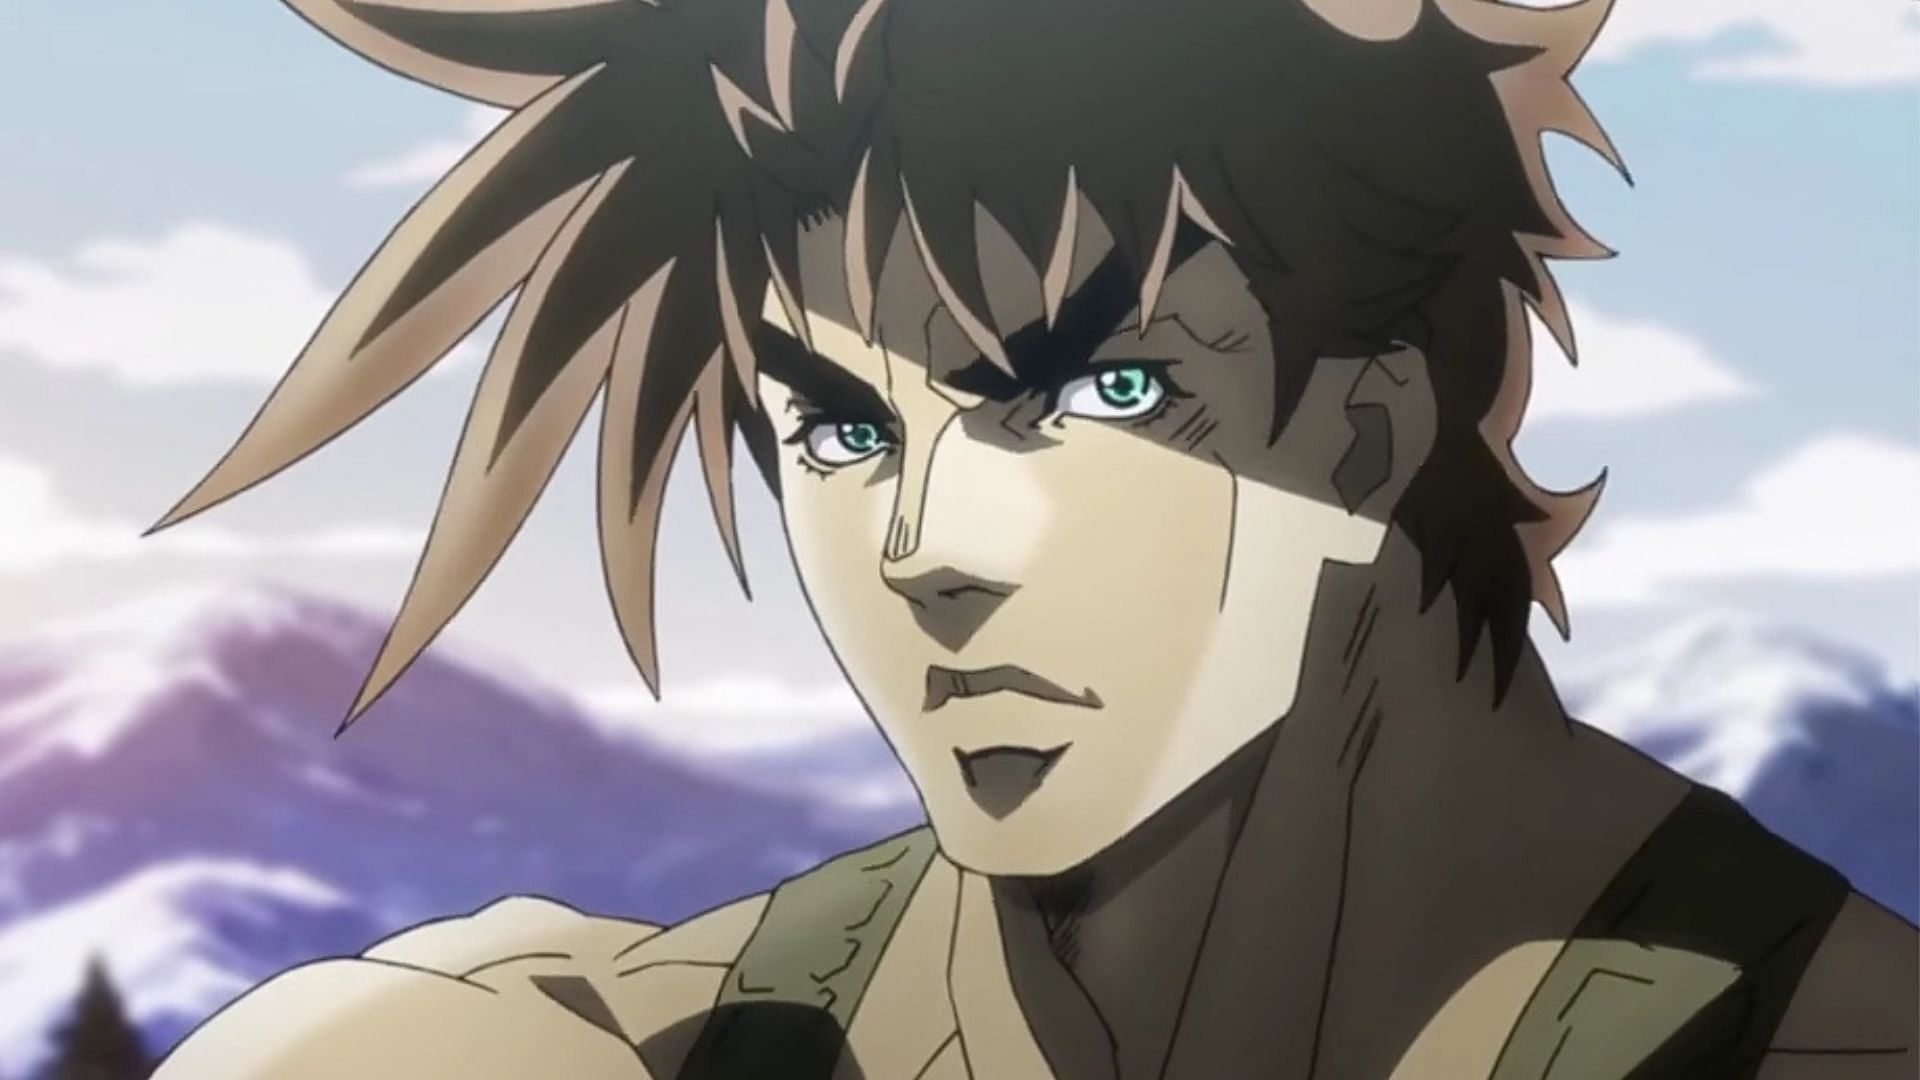 Joseph Joestar as seen in the anime (Image via David Productions)